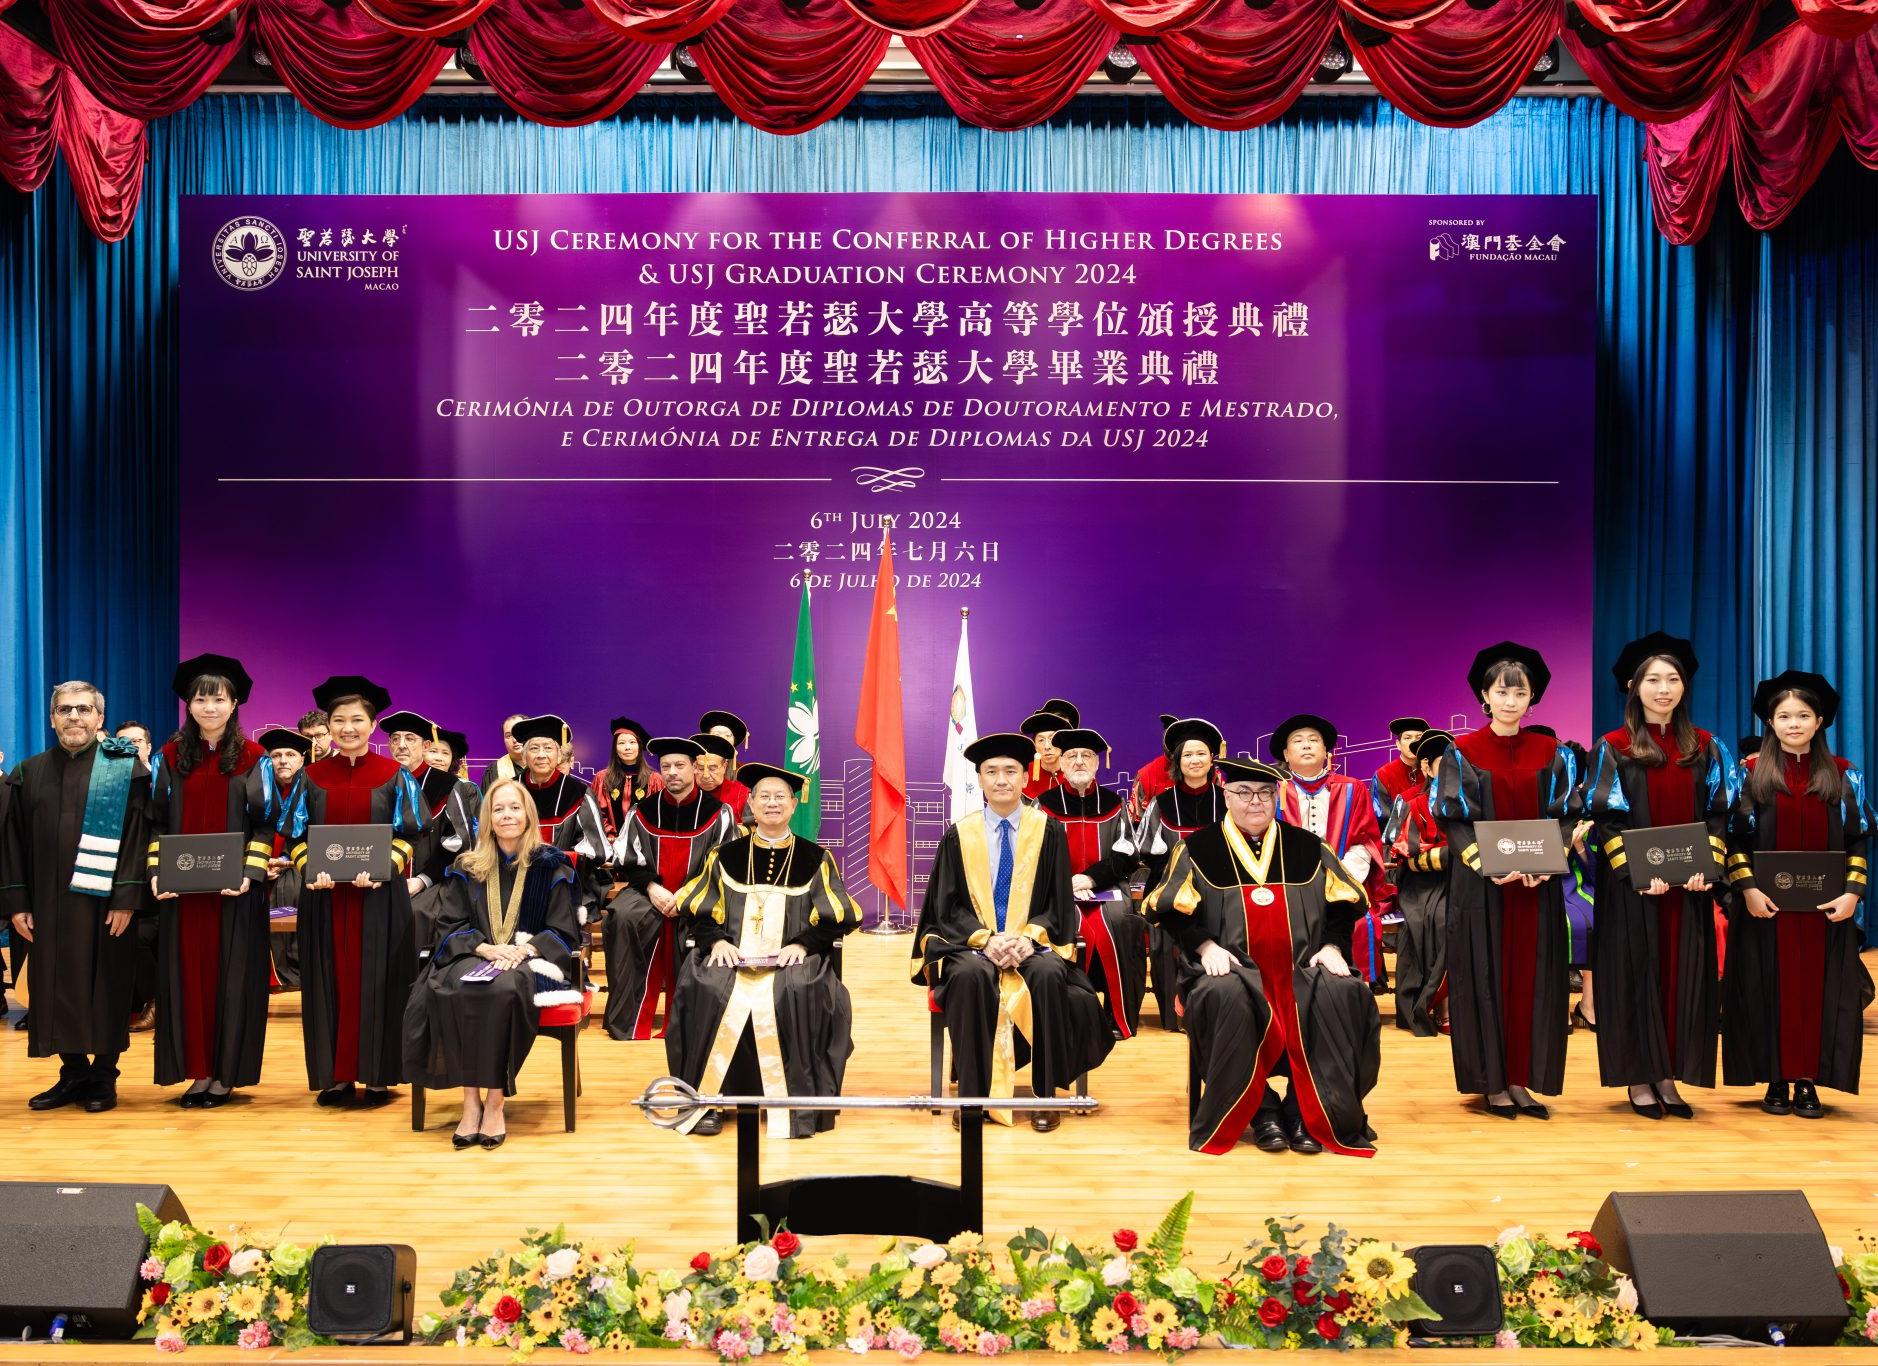 President of the Portuguese Catholic University attends USJ graduation ceremony in Macau